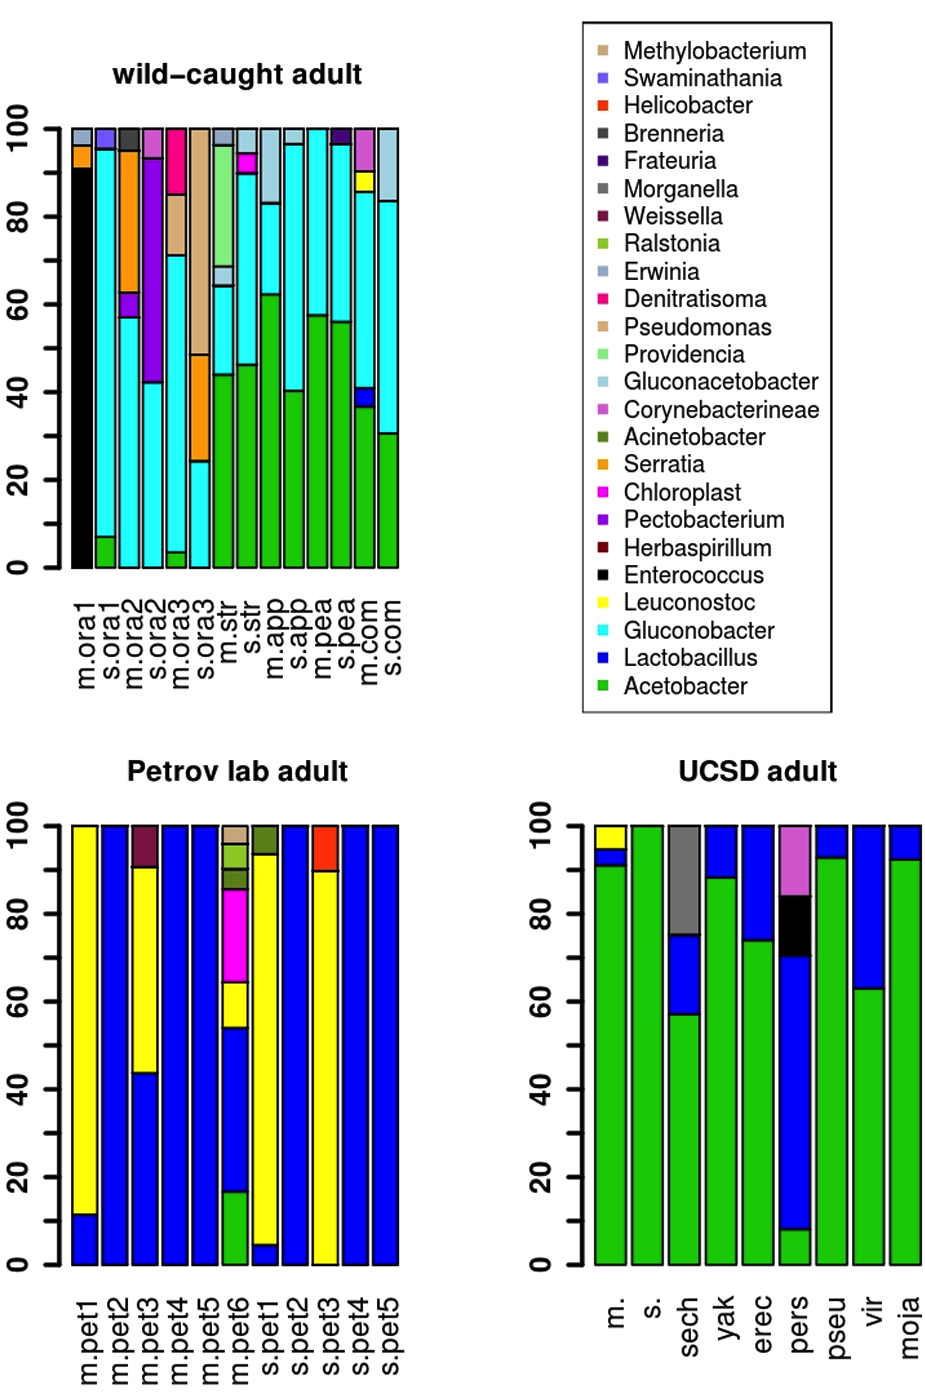 bacterial community profiles of Drosophila